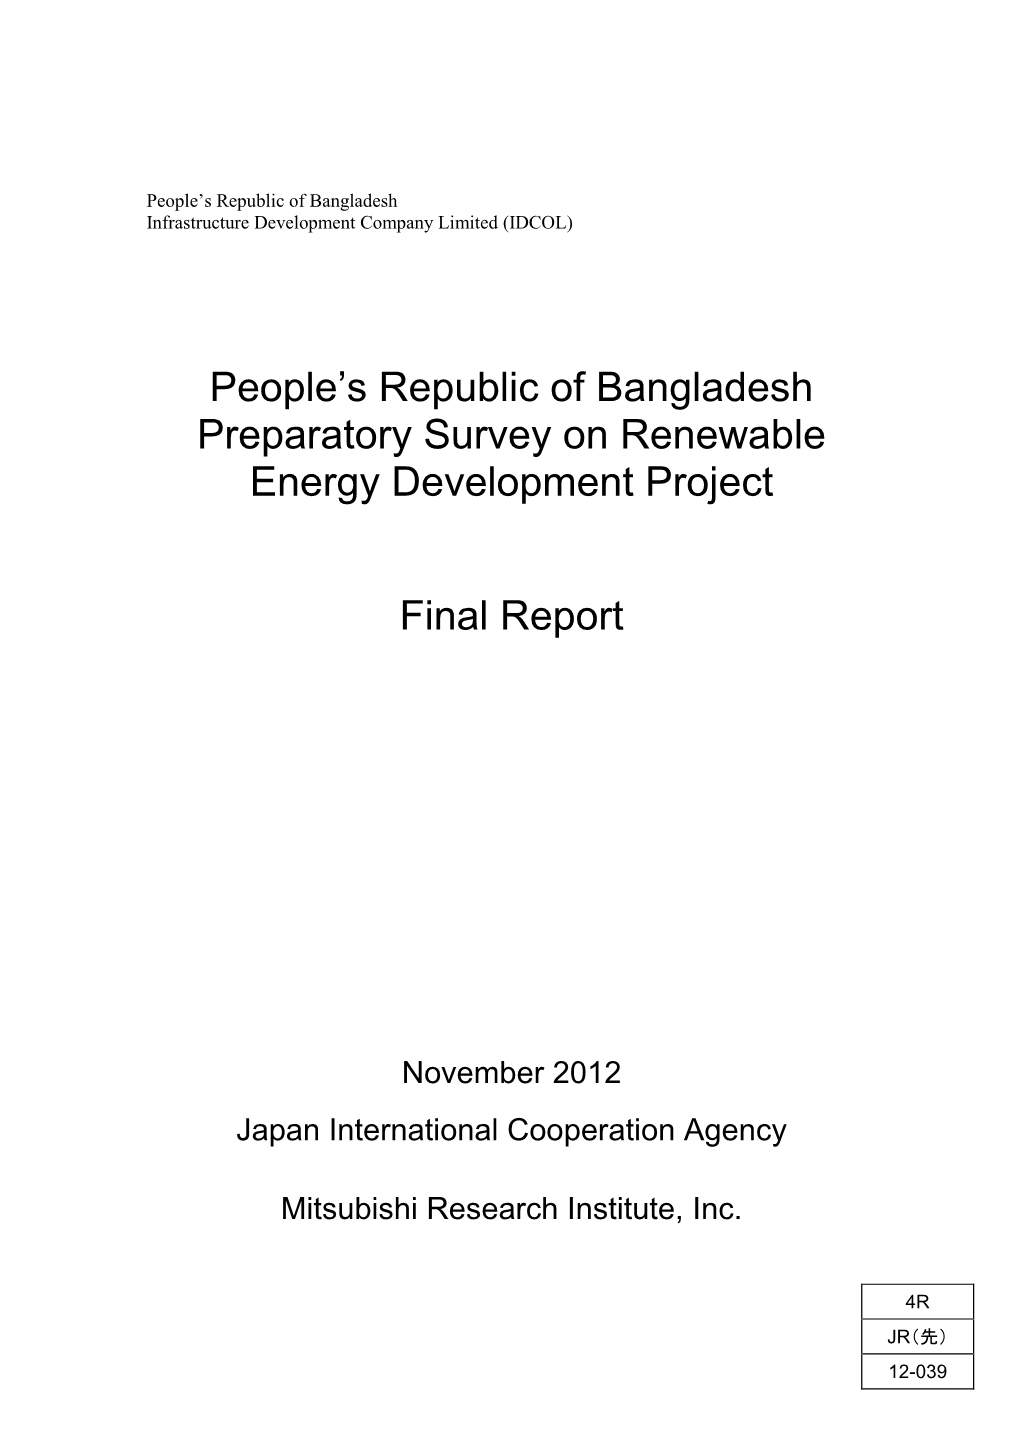 People's Republic of Bangladesh Preparatory Survey on Renewable